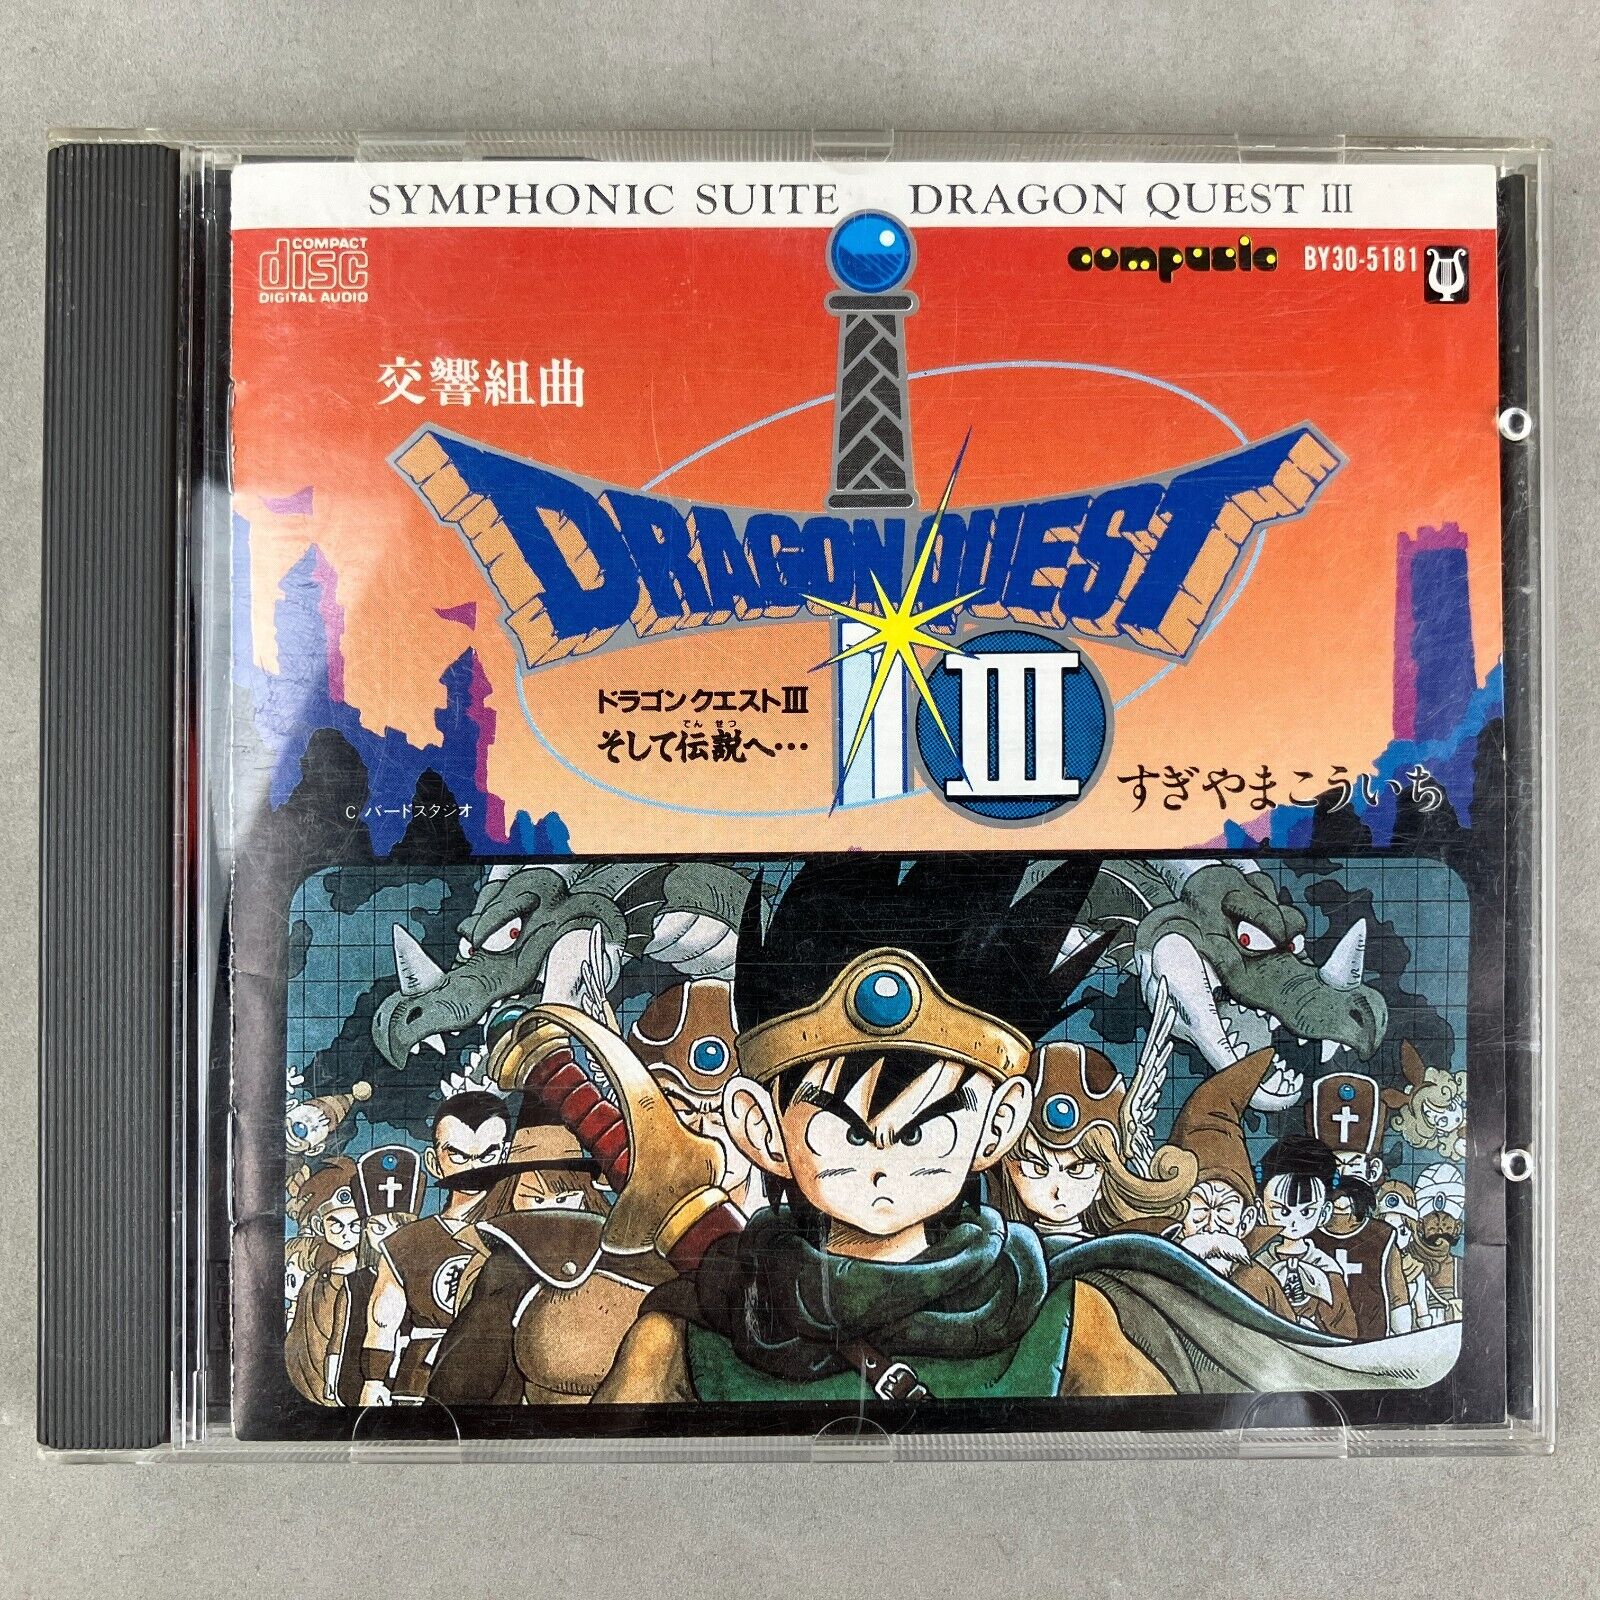 1988 Apollon Dragon Quest 3 III Symphonic Suite Game Soundtrack OST CD Japan